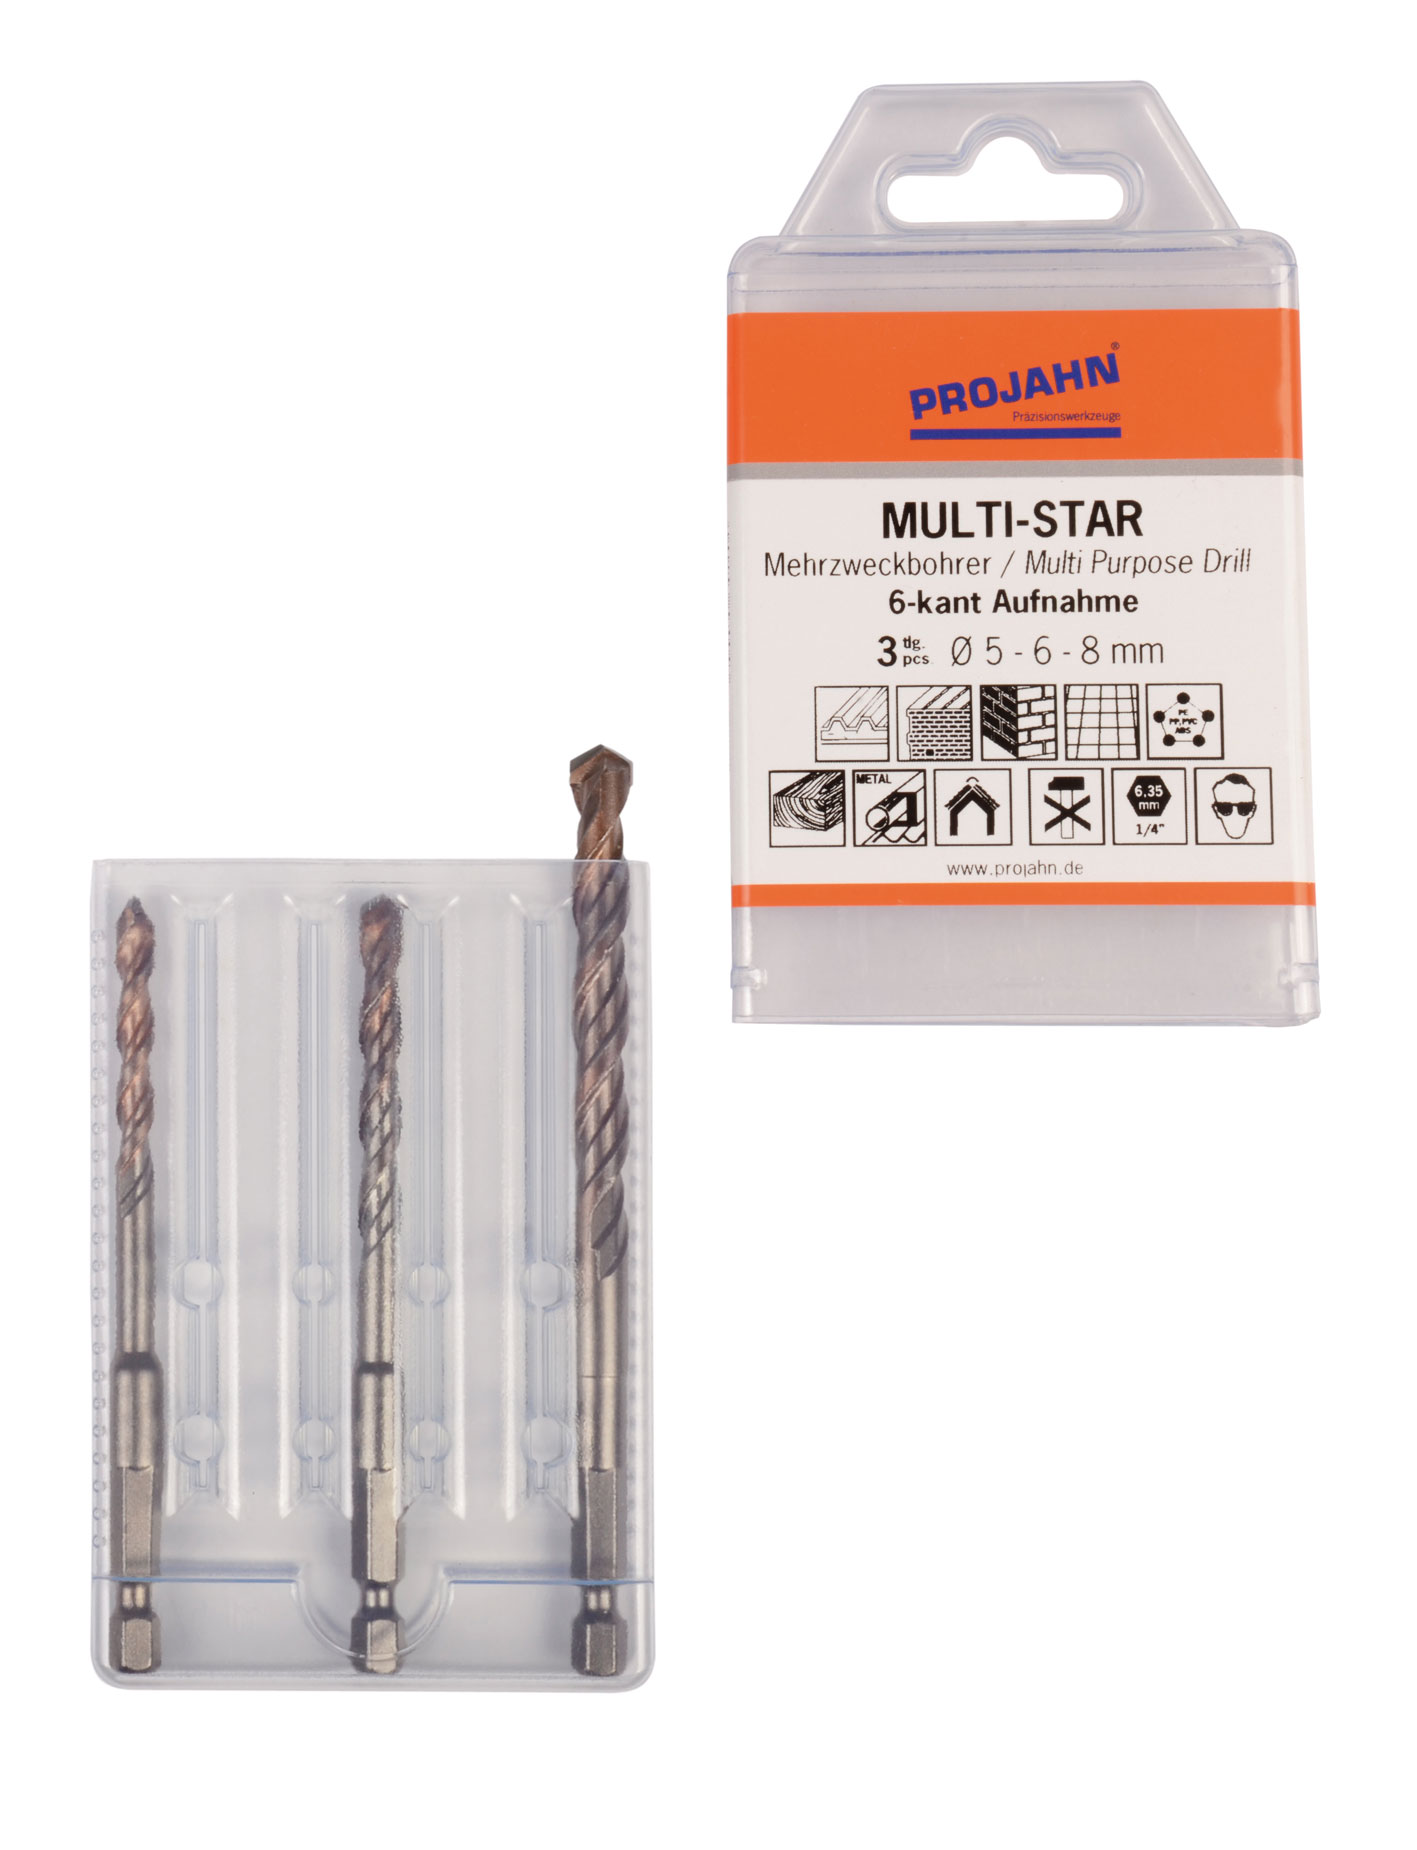 MULTI-STAR Multi purpose drill bit Set 3 pcs.